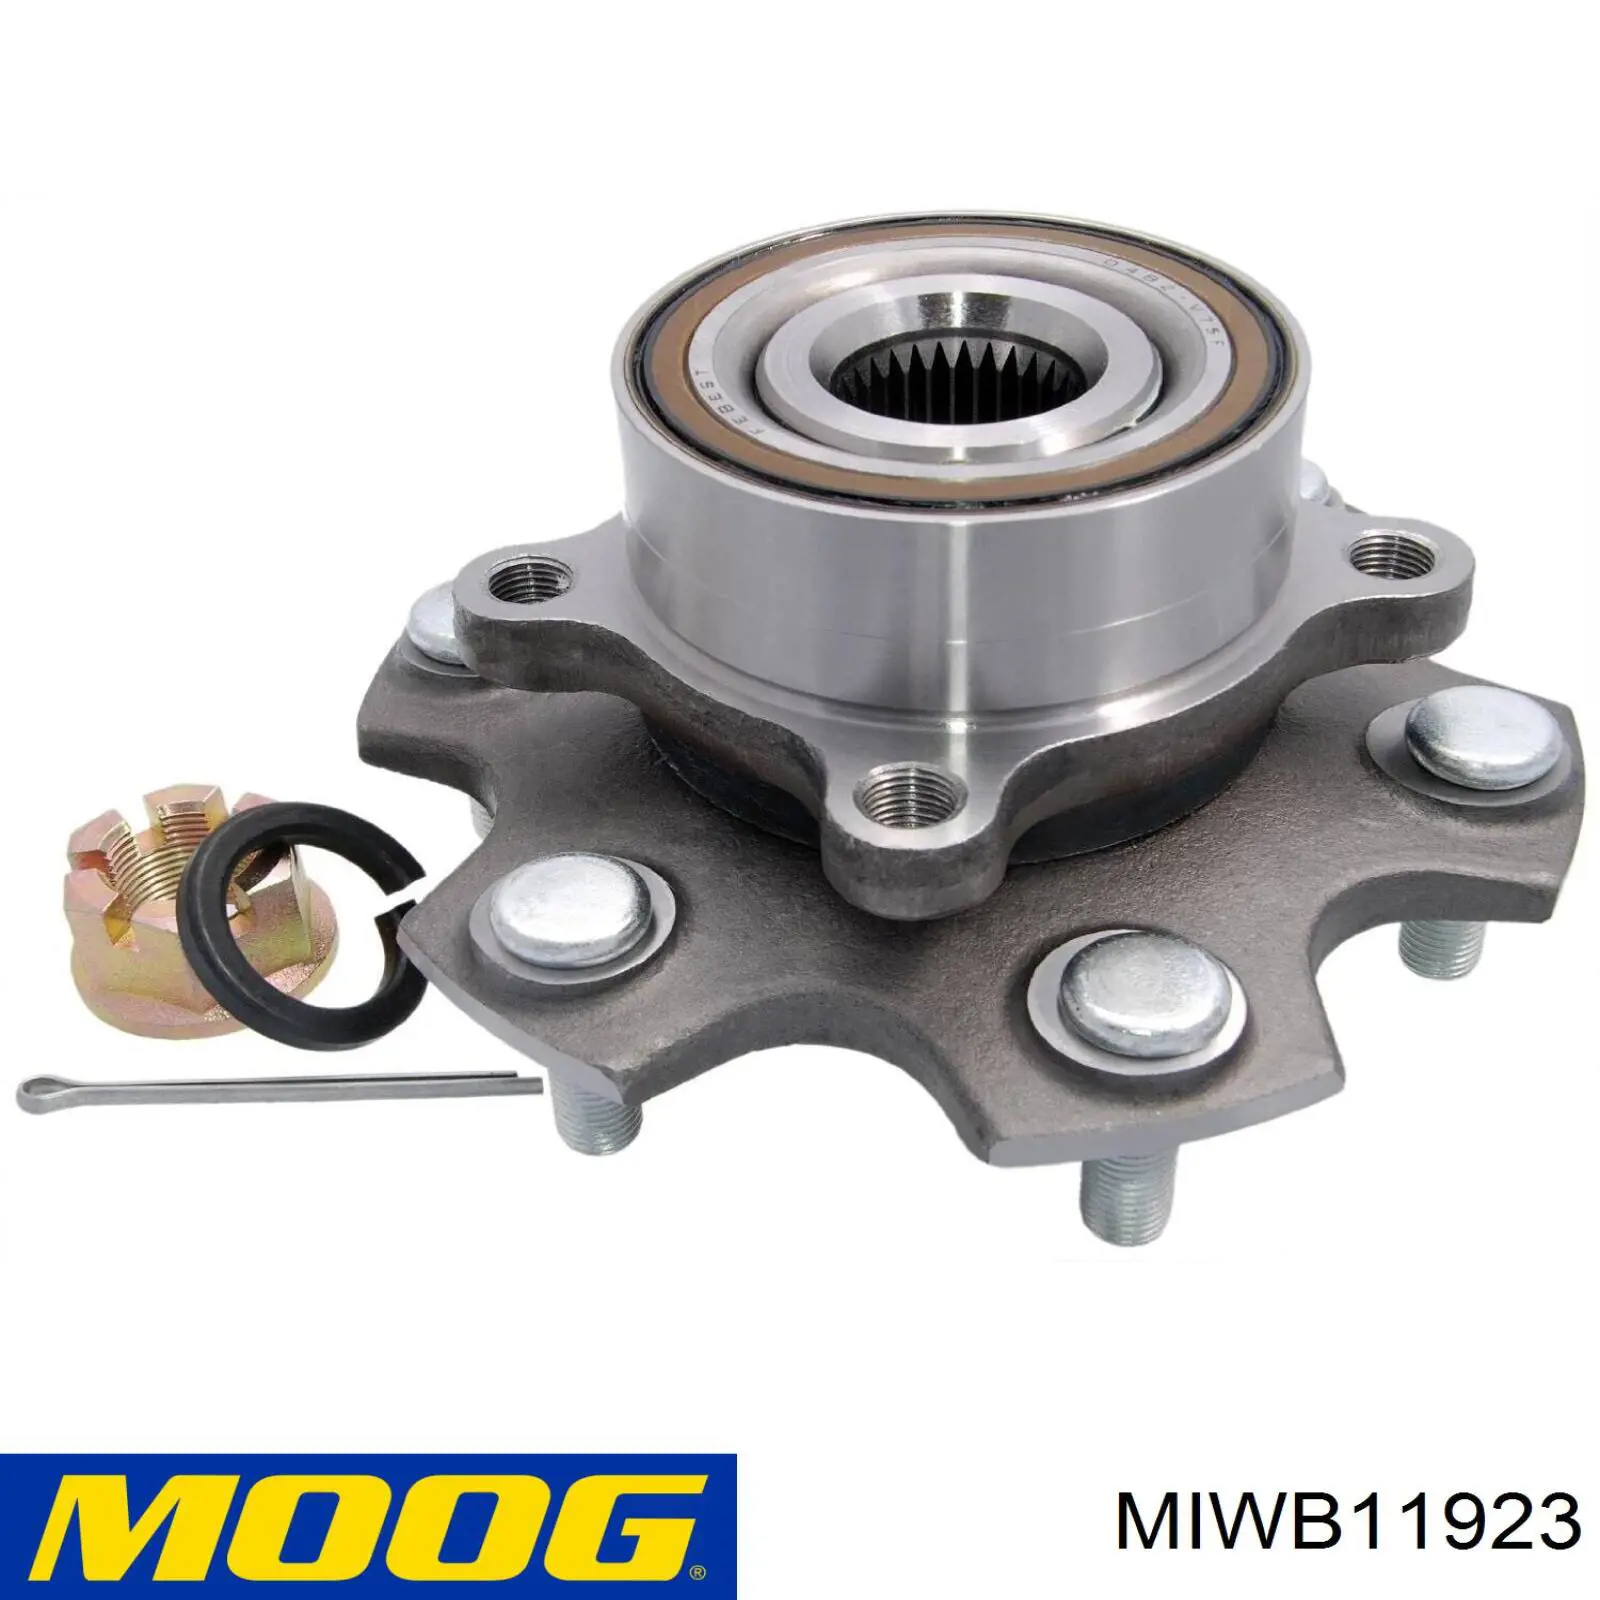 MIWB11923 Moog cojinete de rueda delantero